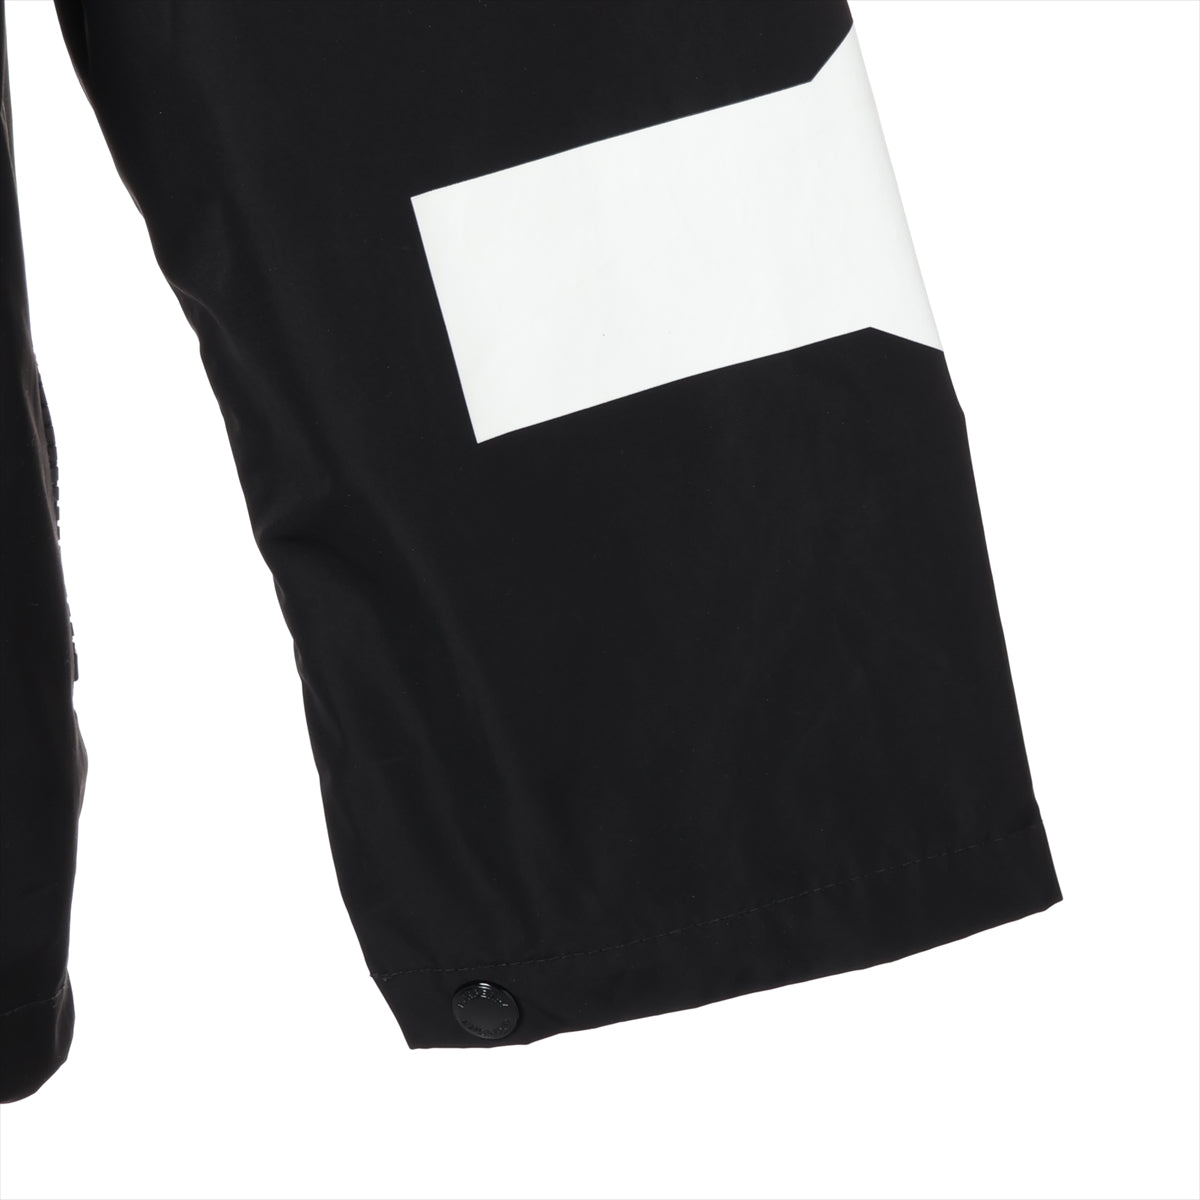 Burberry Tissi period Polyester Jacket L Men's Black × White  printed zip-up 8029833